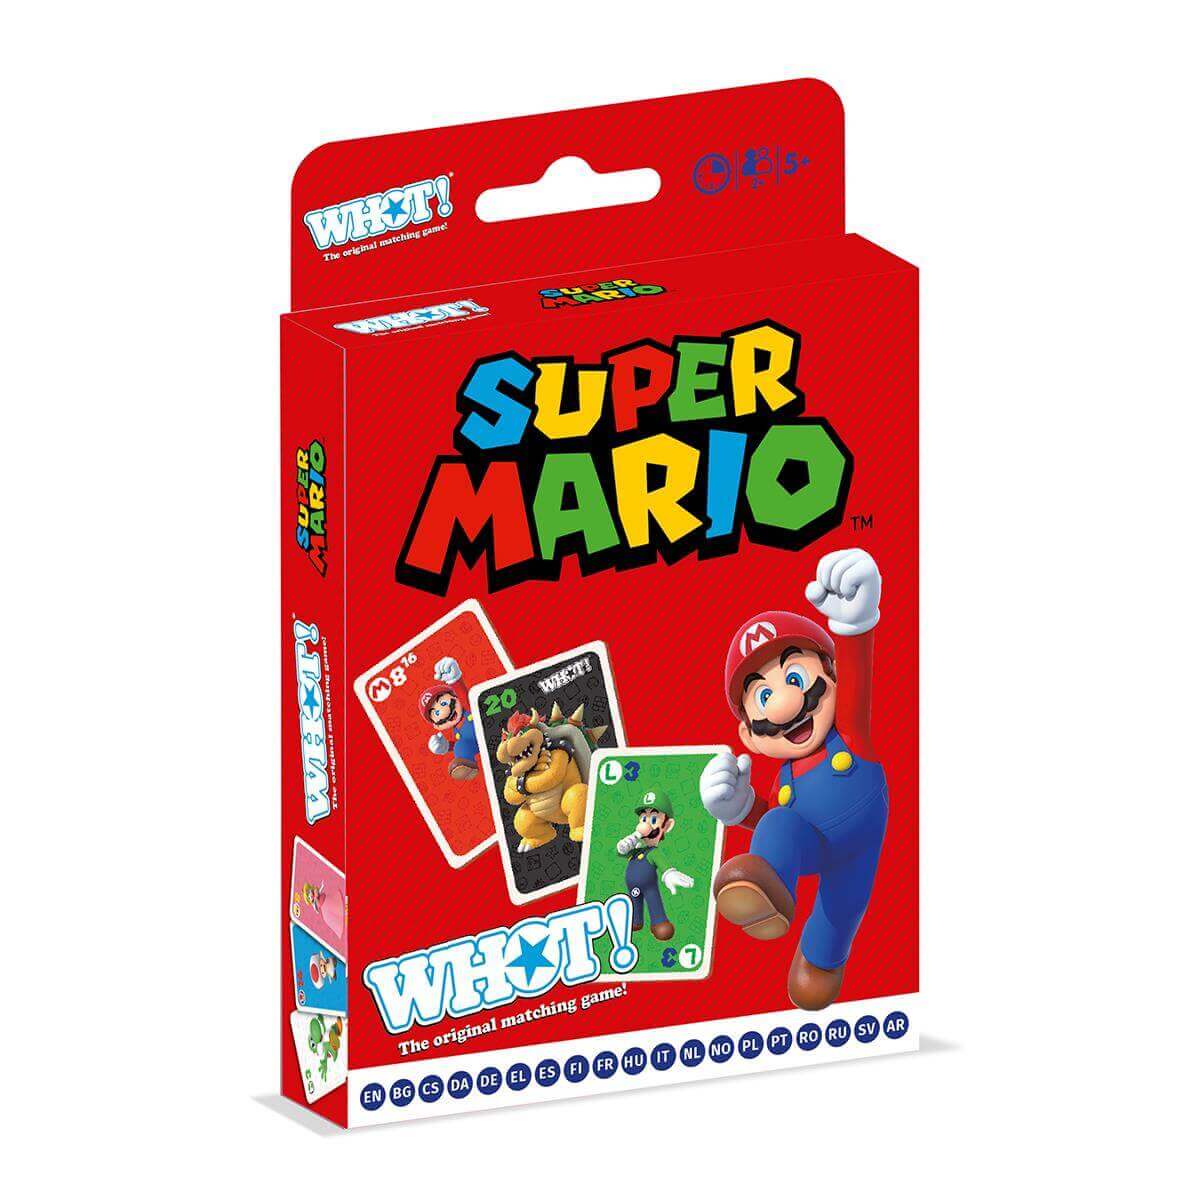 Nintendo Super Mario Top Trumps Match Cube Game